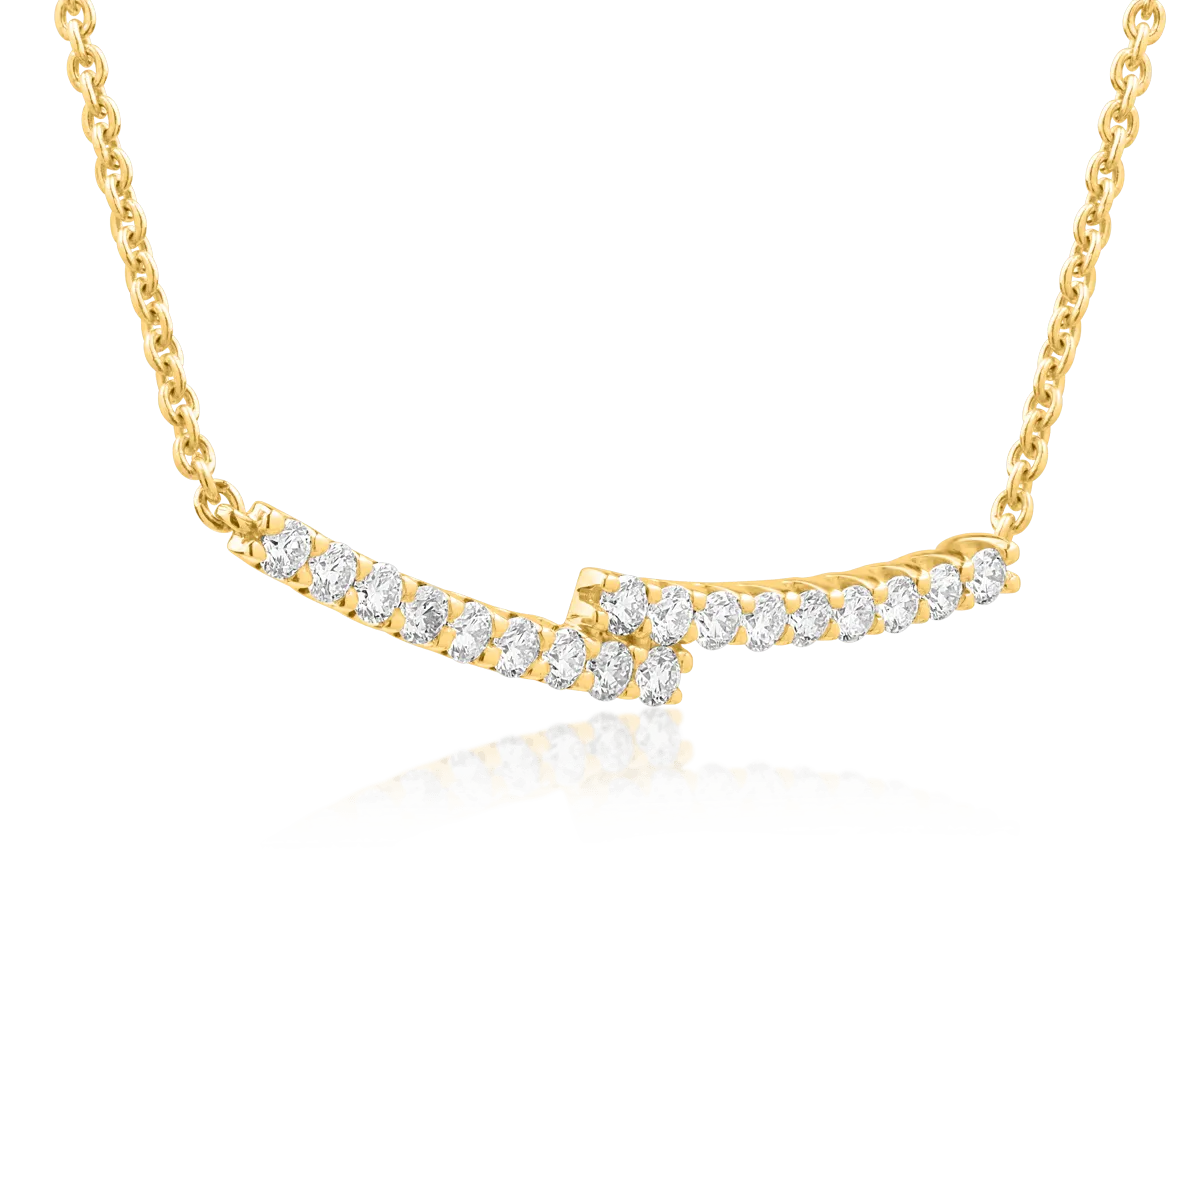 14K yellow gold pendant chain with 0.5ct diamonds